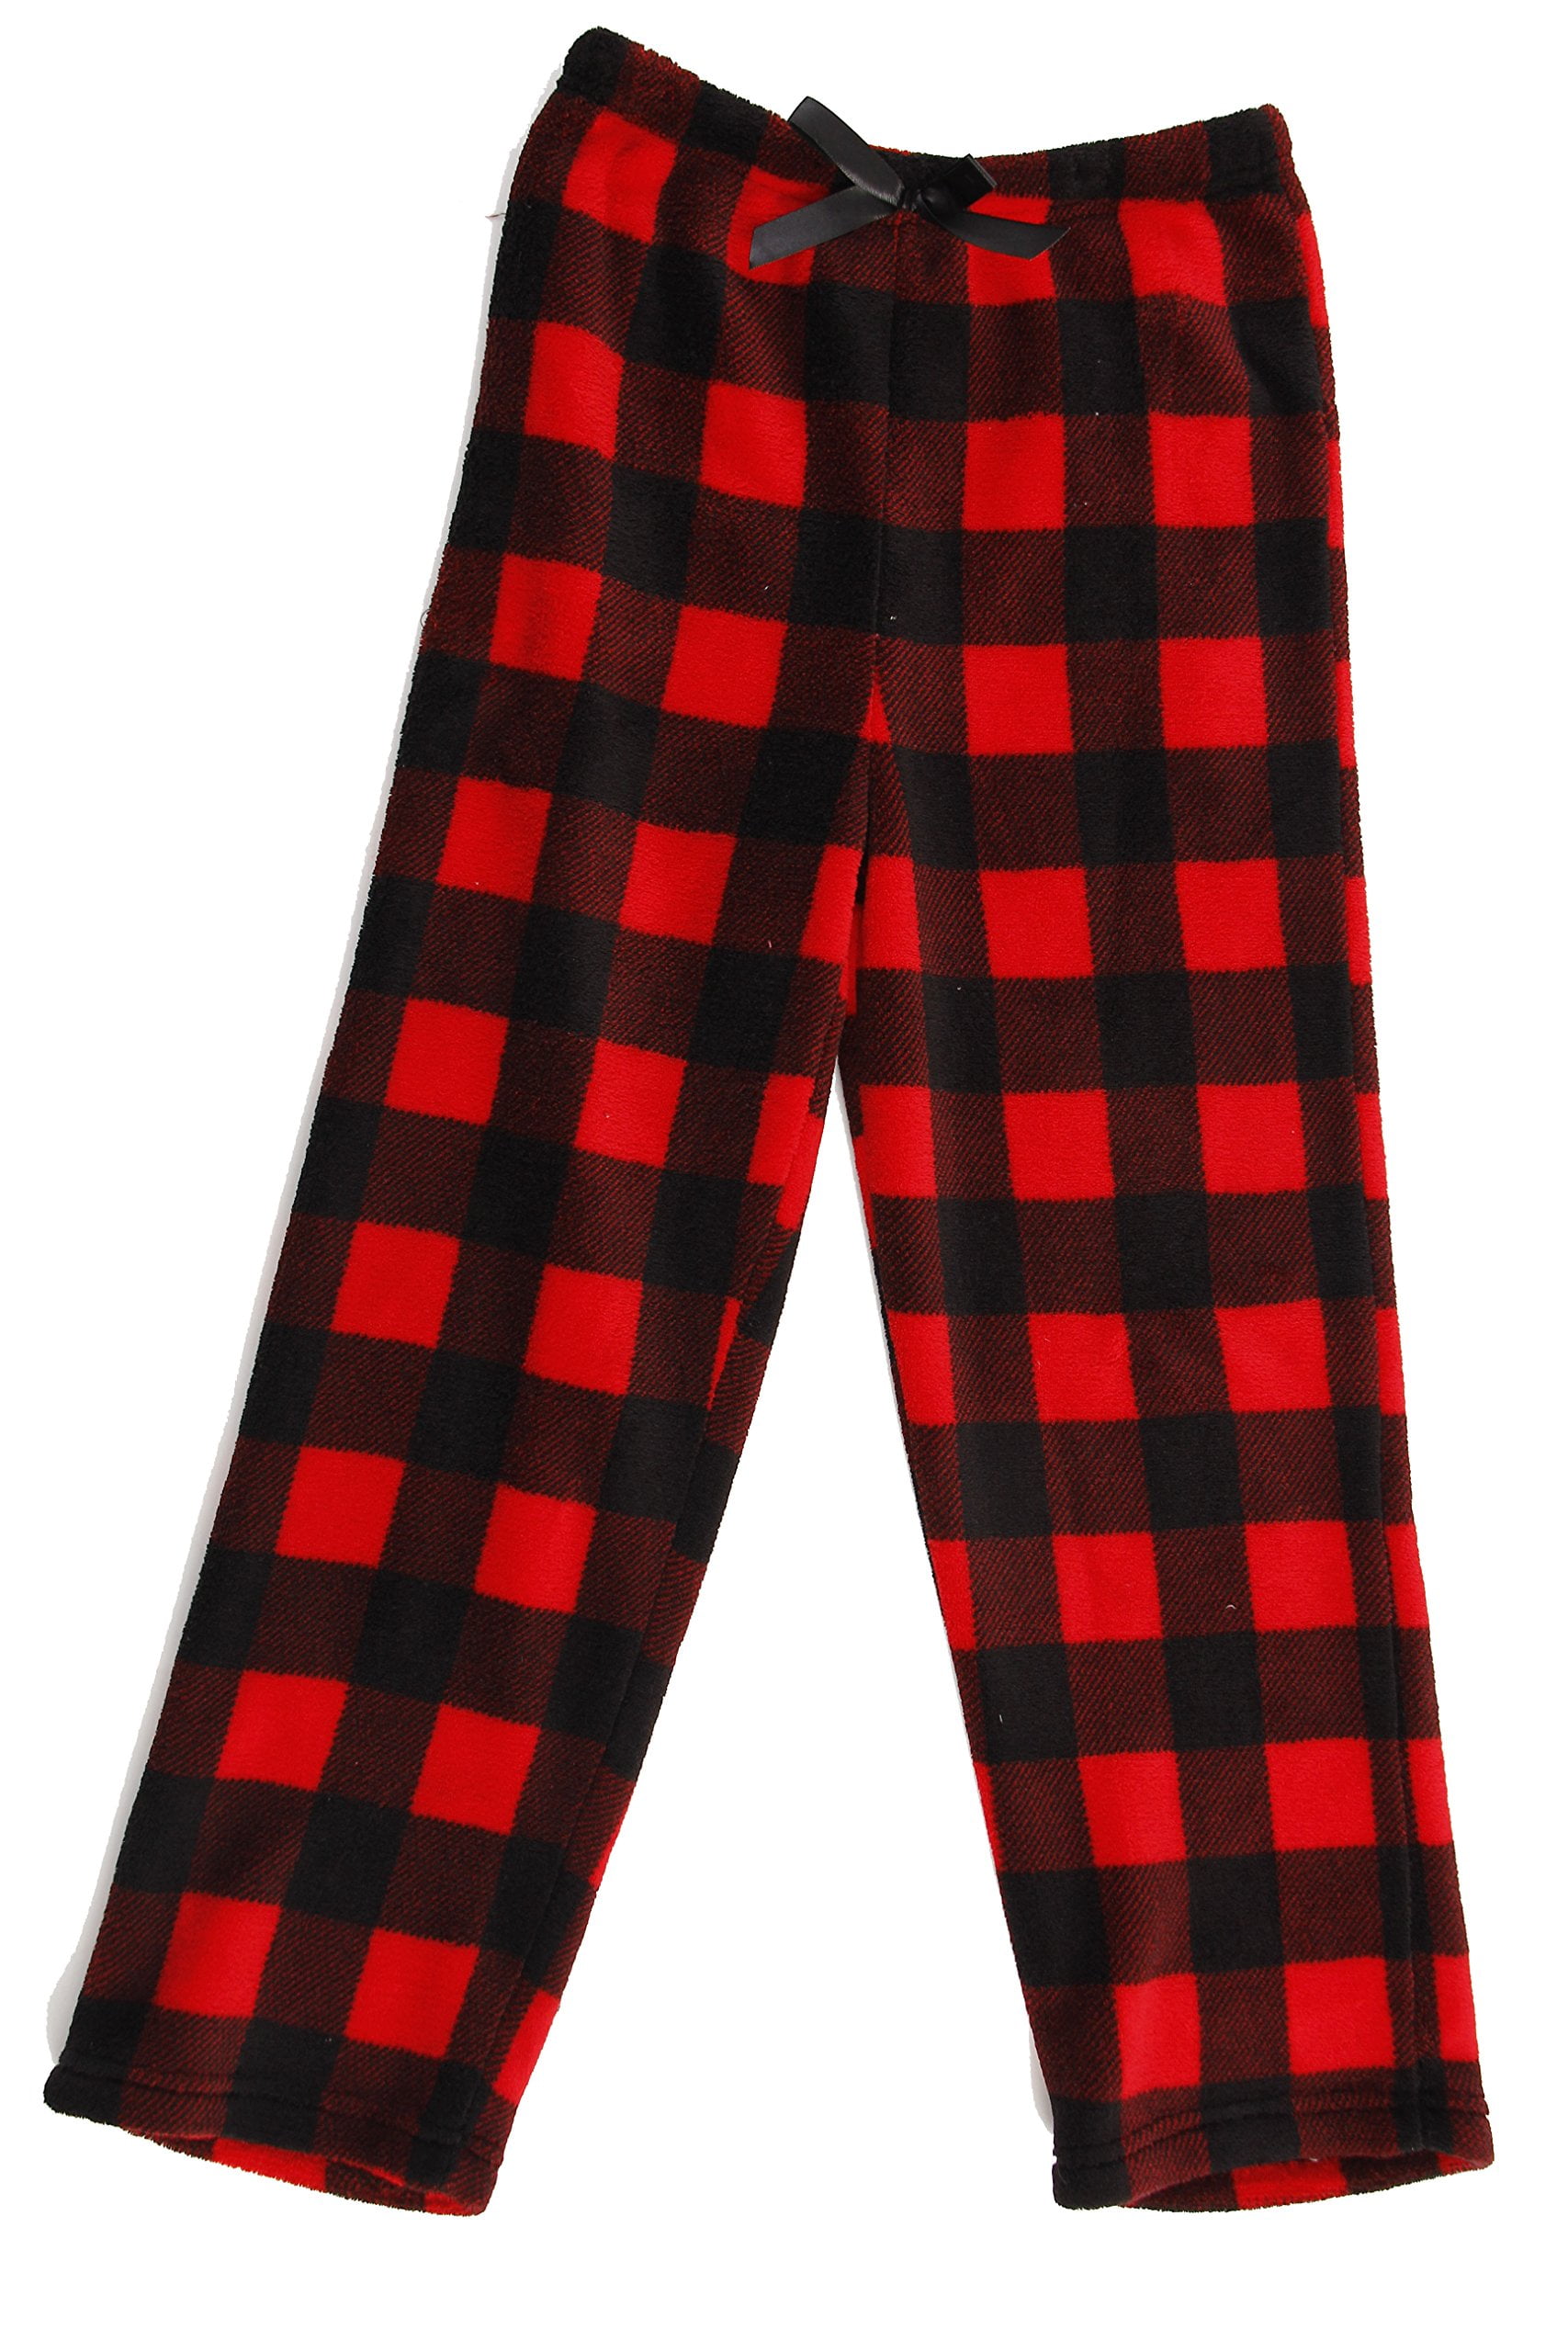 NEW Aeropostale Junior Girls Red Plaid Flannel PJ Pajama Bottoms Pants XS XSmall 